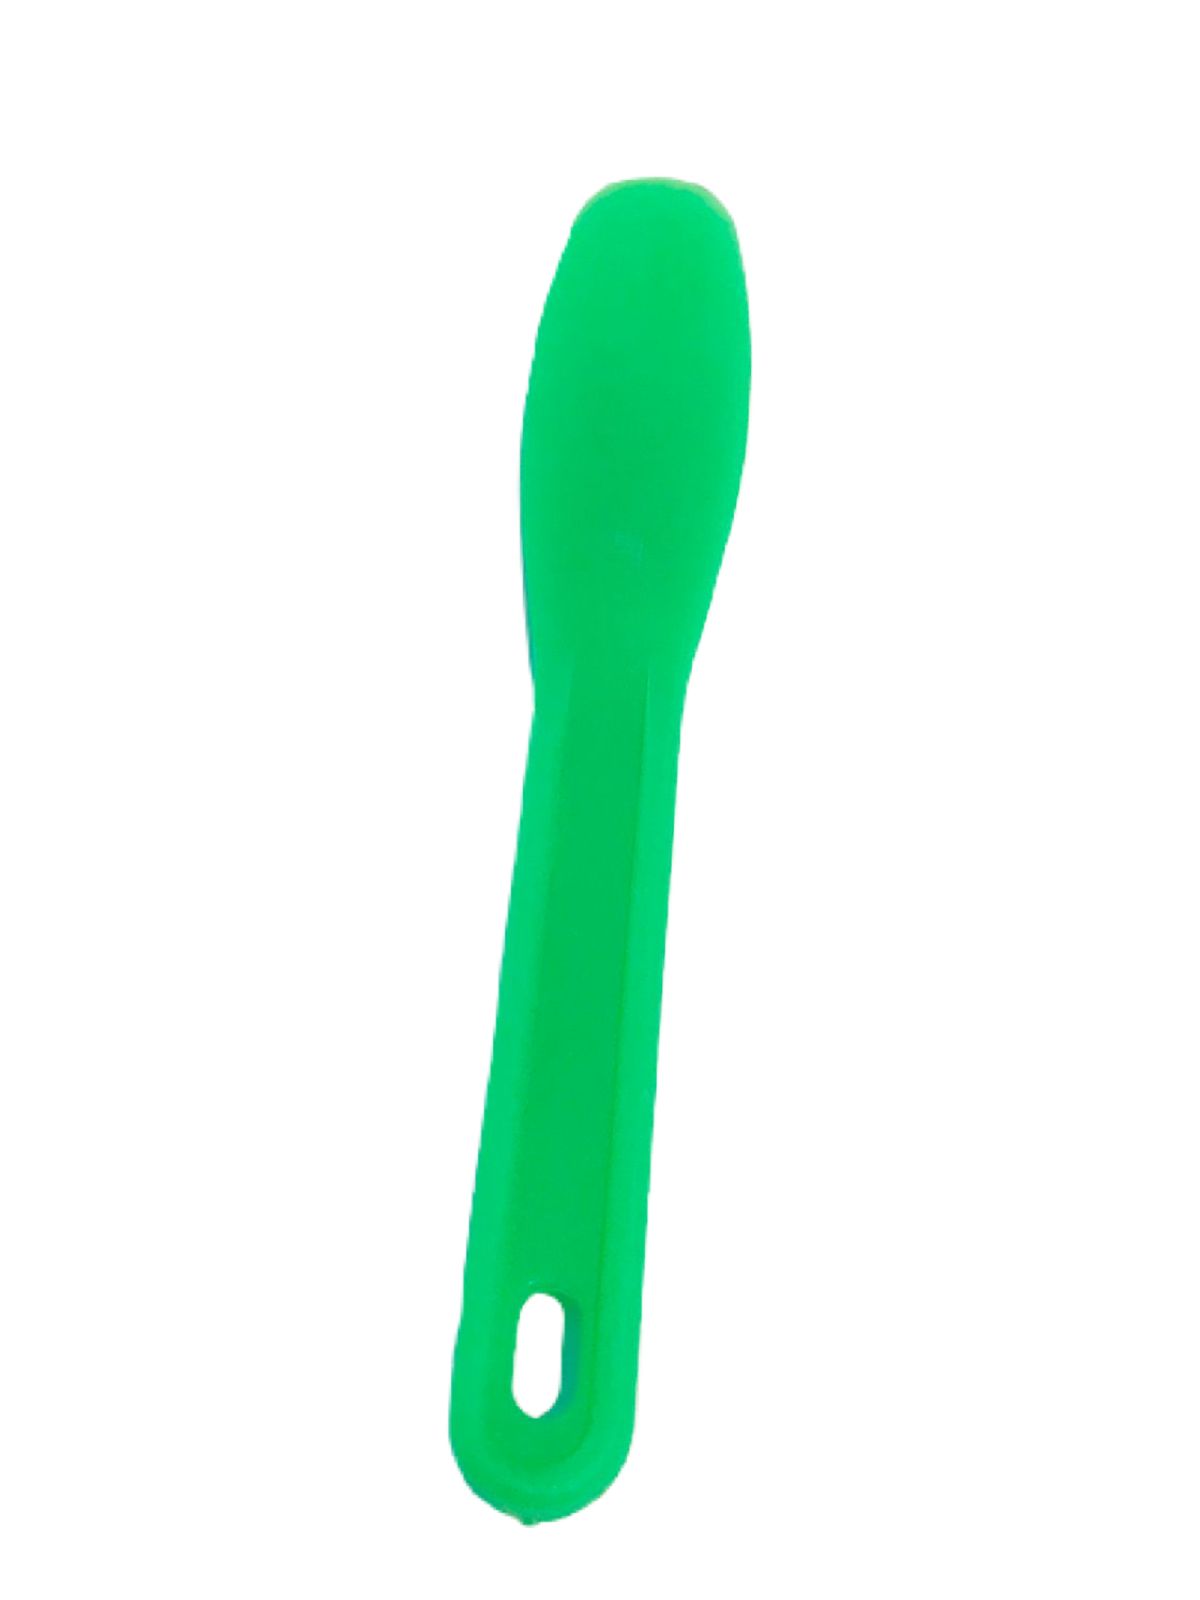 plastic spatula